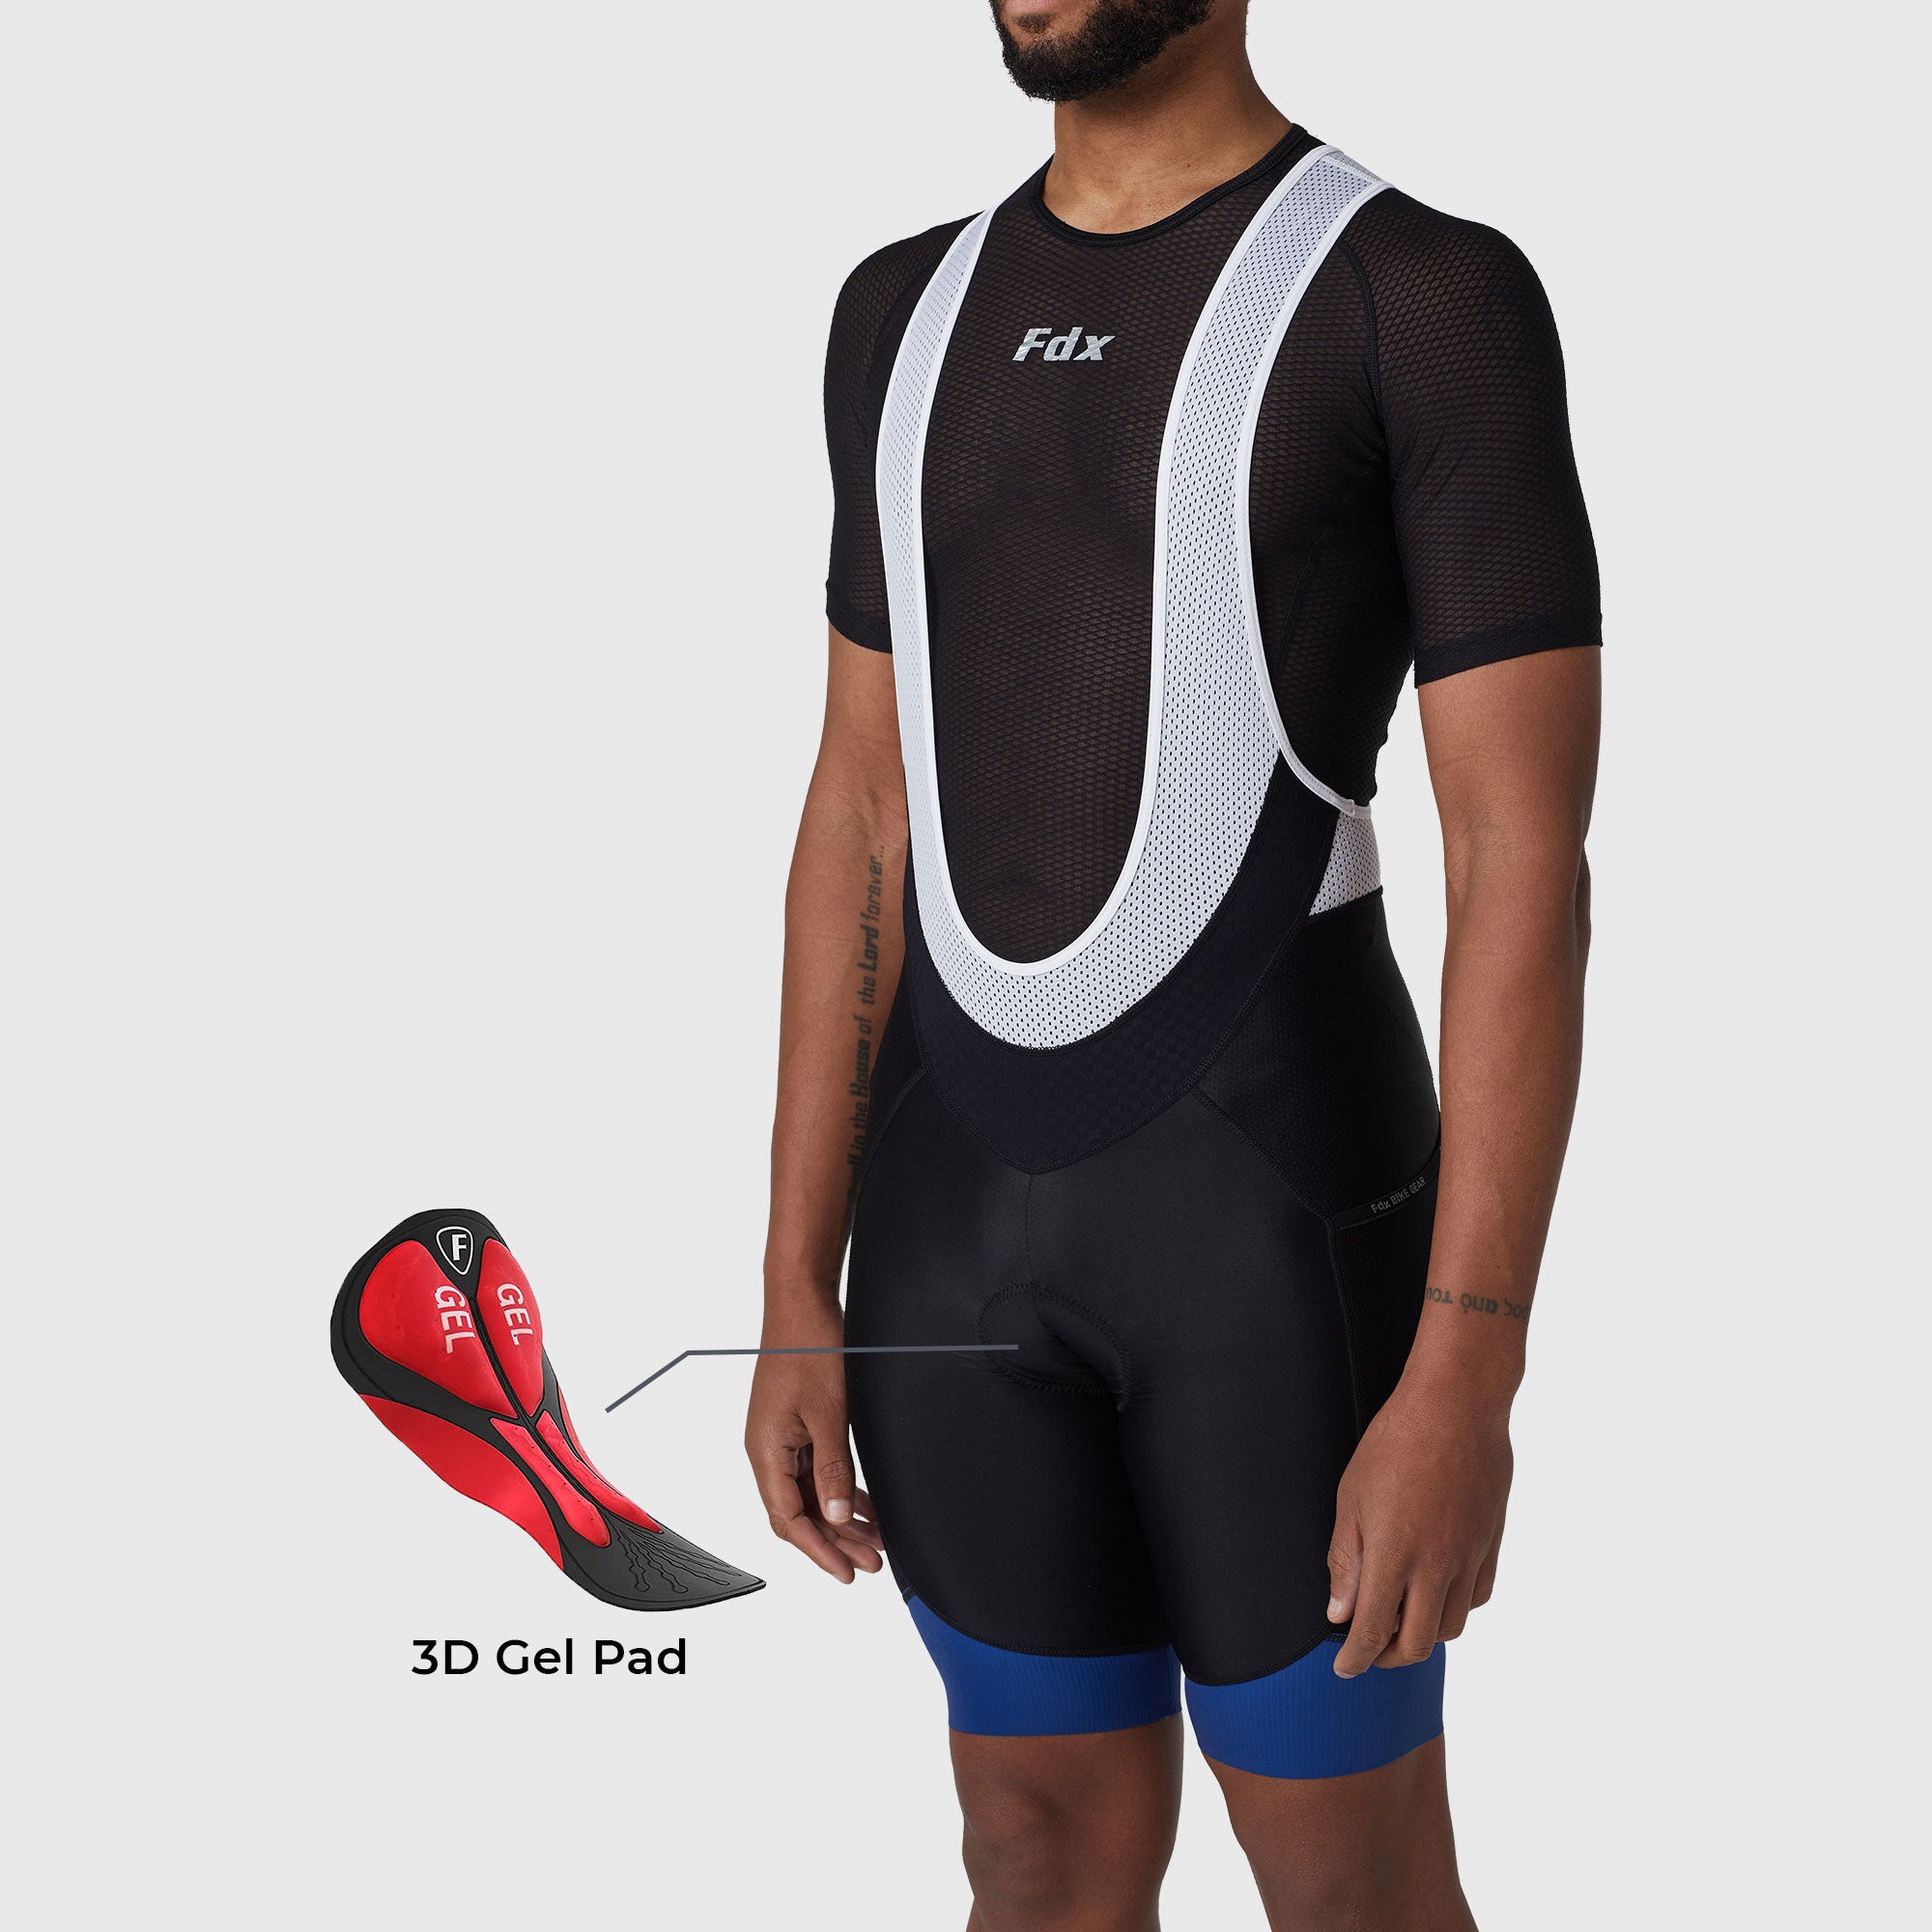 Fdx Men's Black & Blue Gel Padded Cycling Bib Shorts For Summer Best Outdoor Road Bike Short Length Bib - Essential